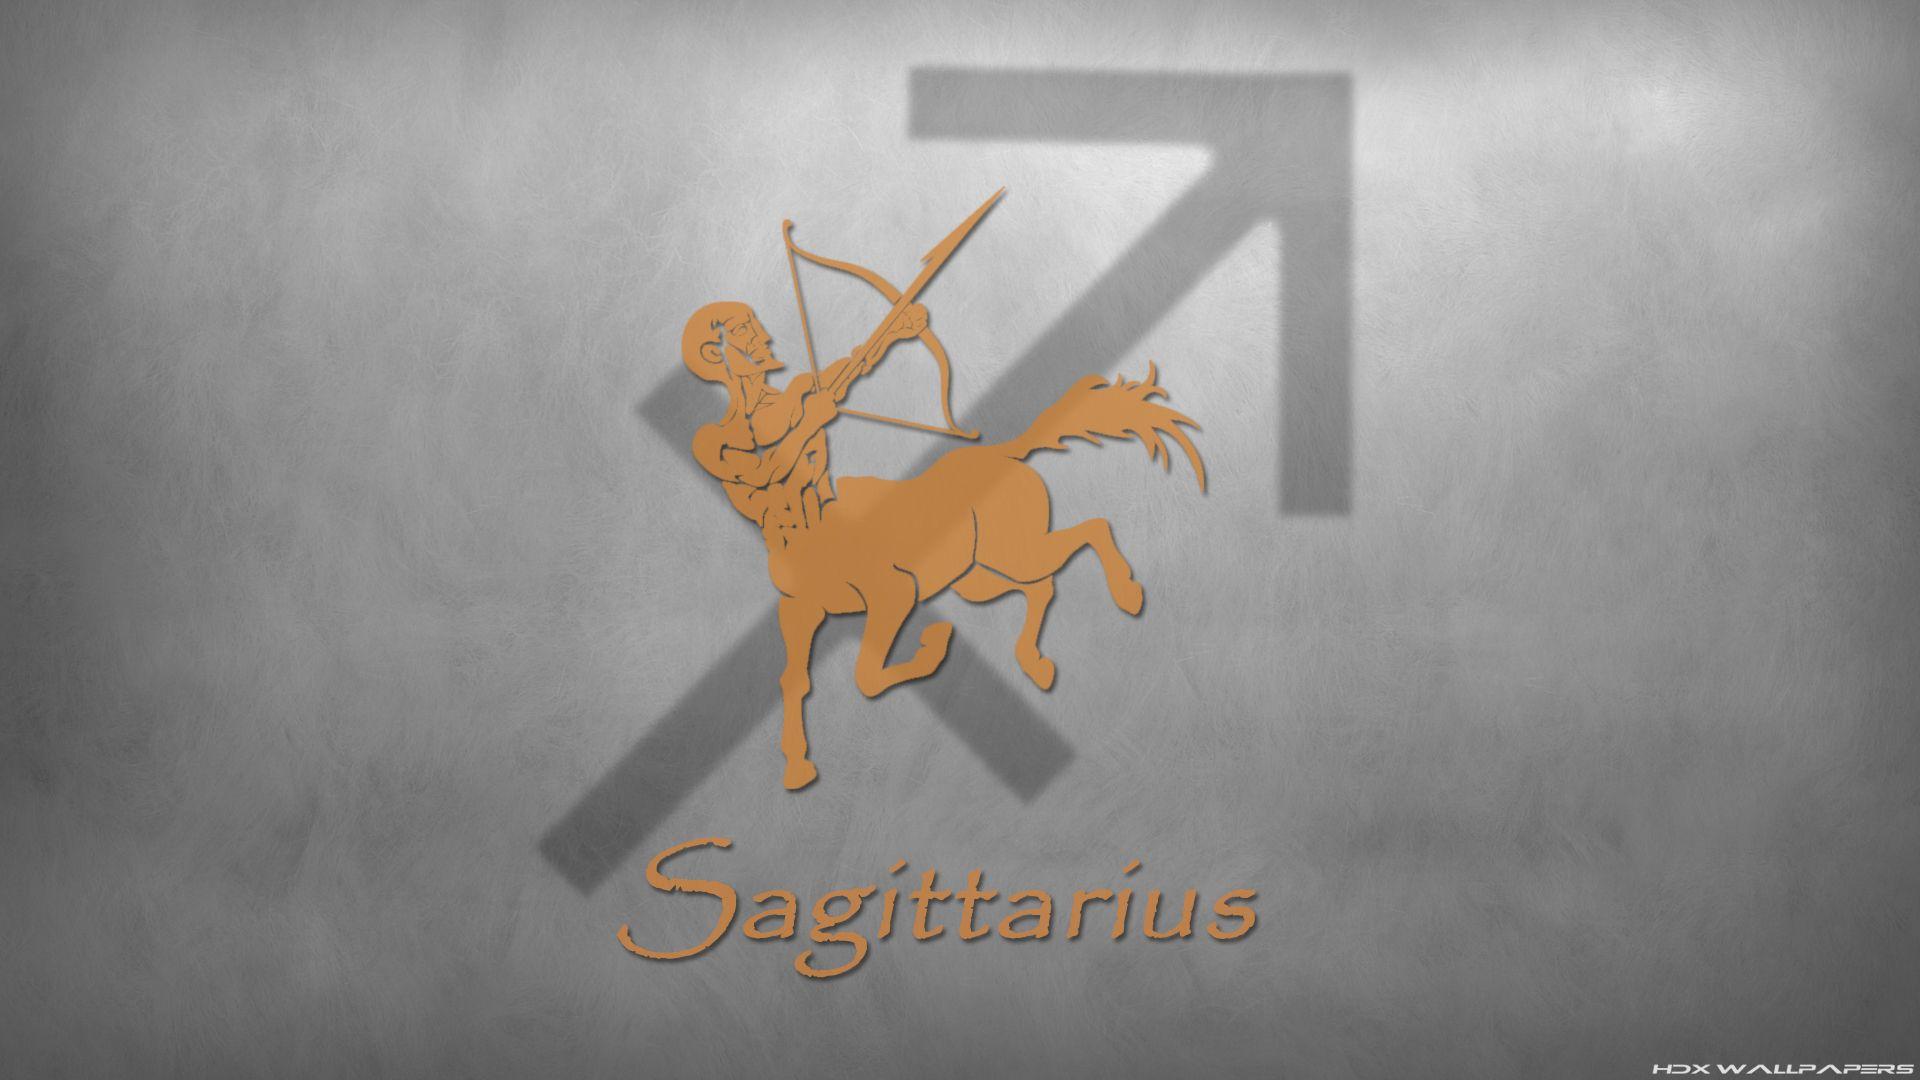 Zodiac sign Sagittarius wallpaper and image, picture